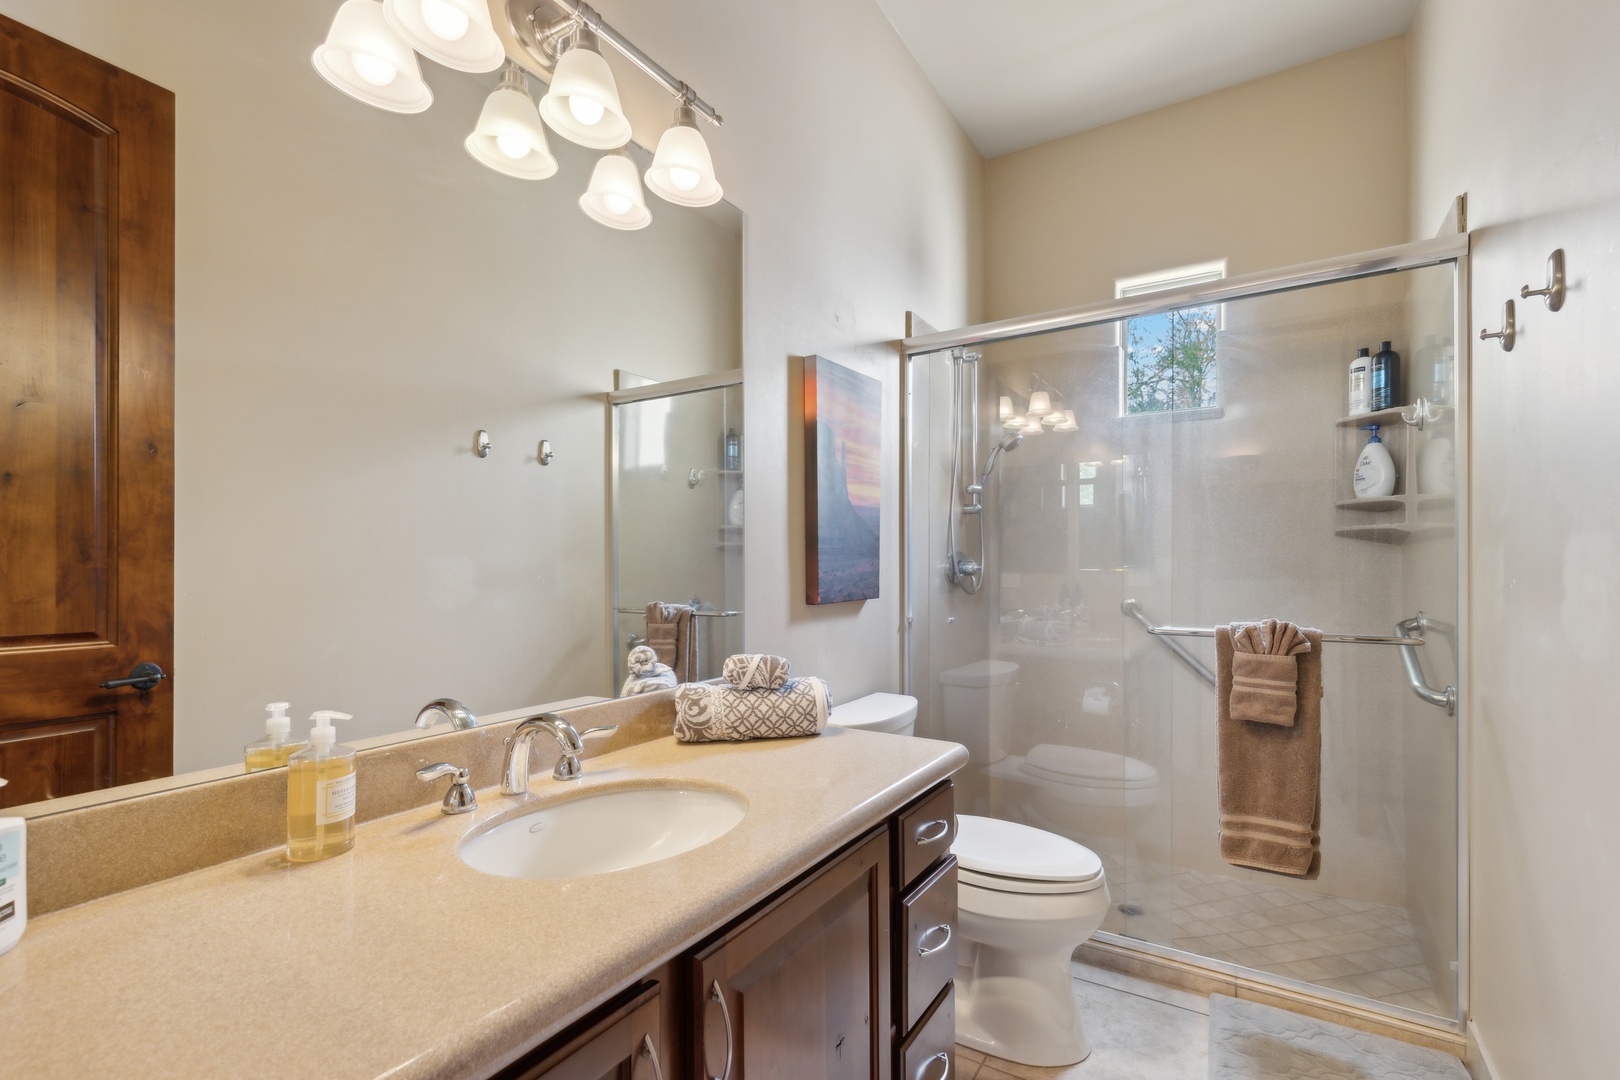 Shared full bathroom offers a single vanity & glass shower